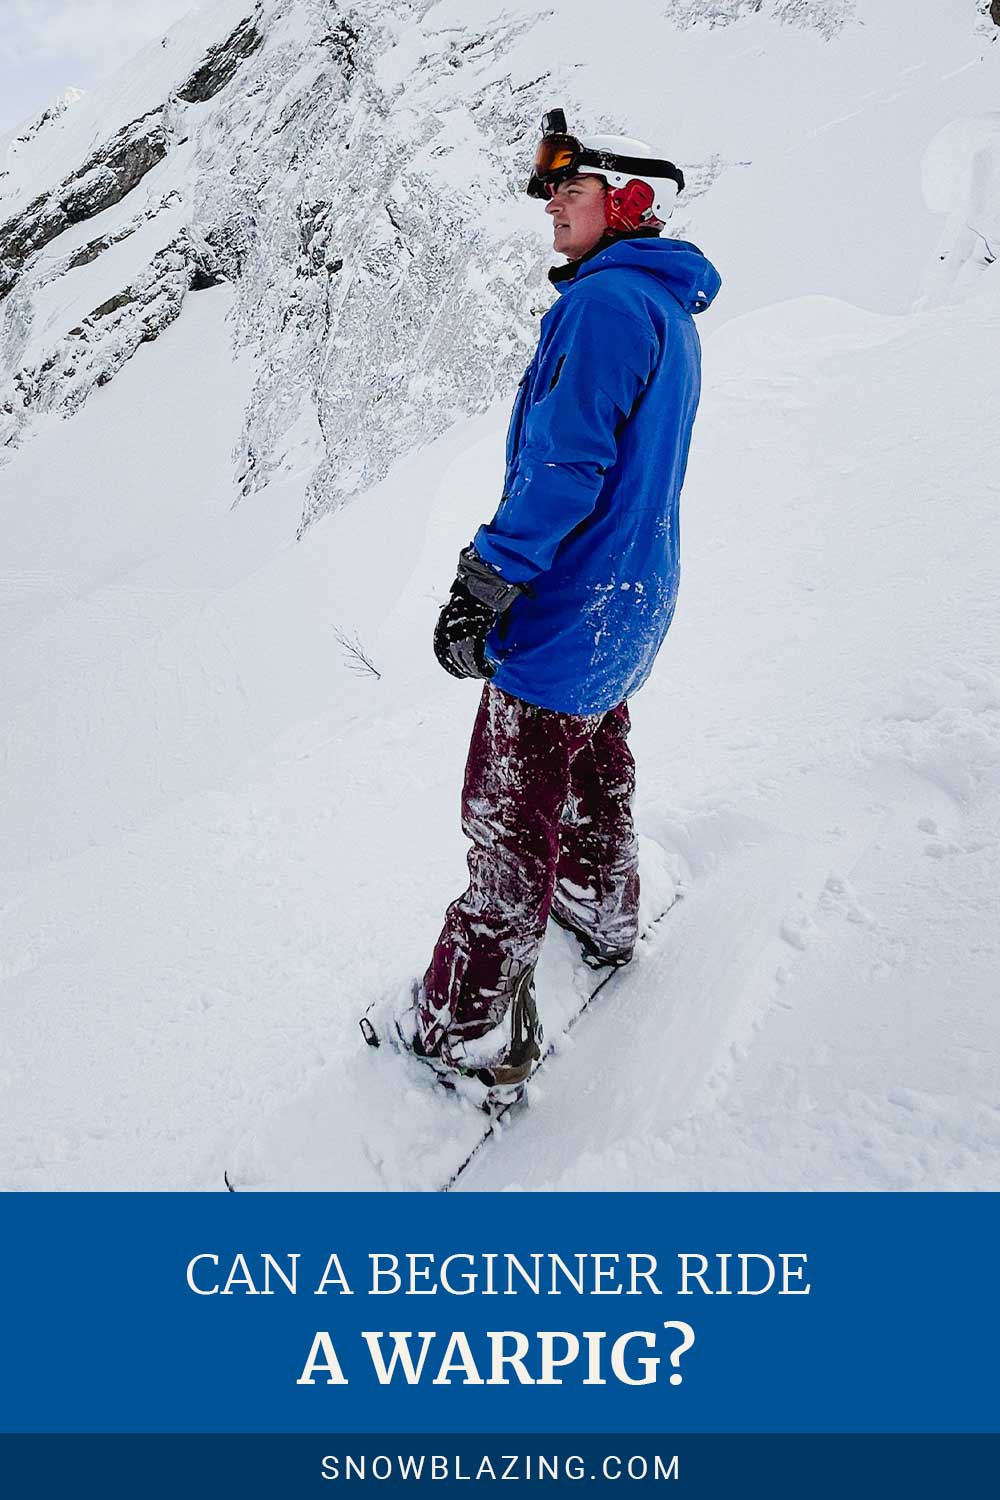 Man in blue jacket standing on a snowboard - Can A Beginner Ride A Warpig?